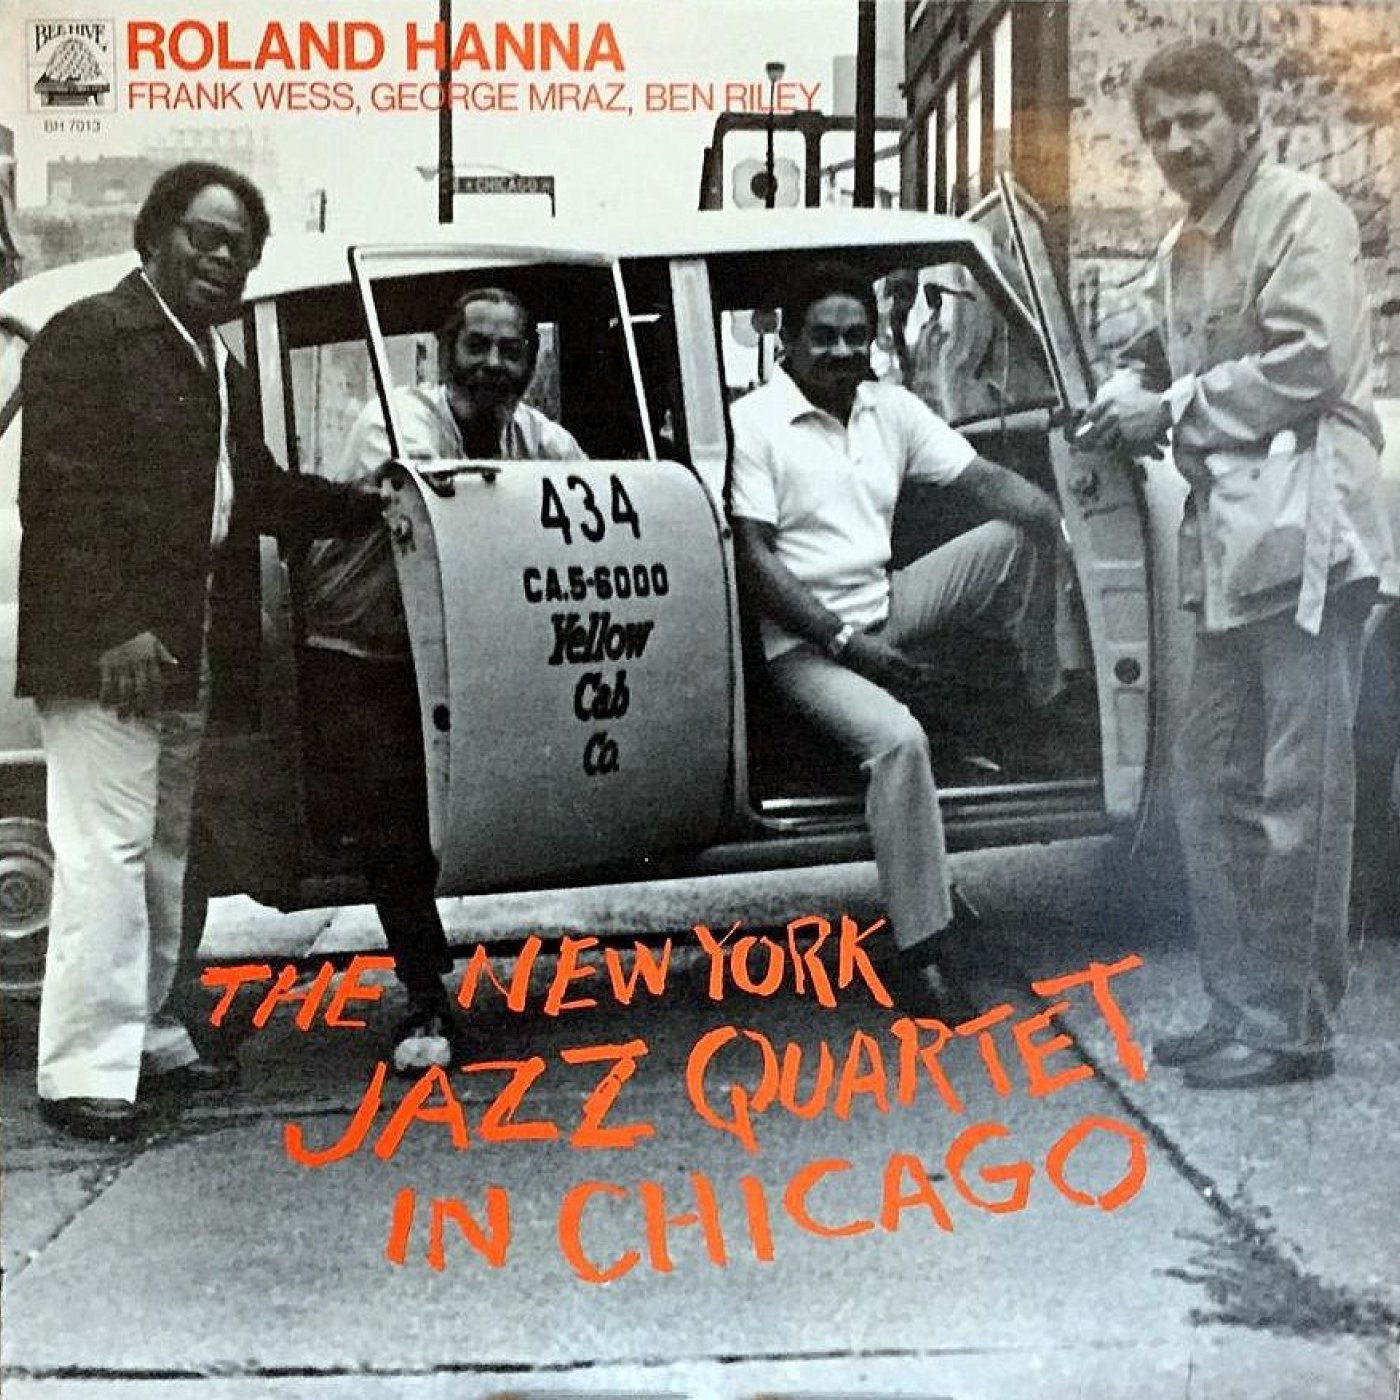 The New York Jazz Quartetin Chicago